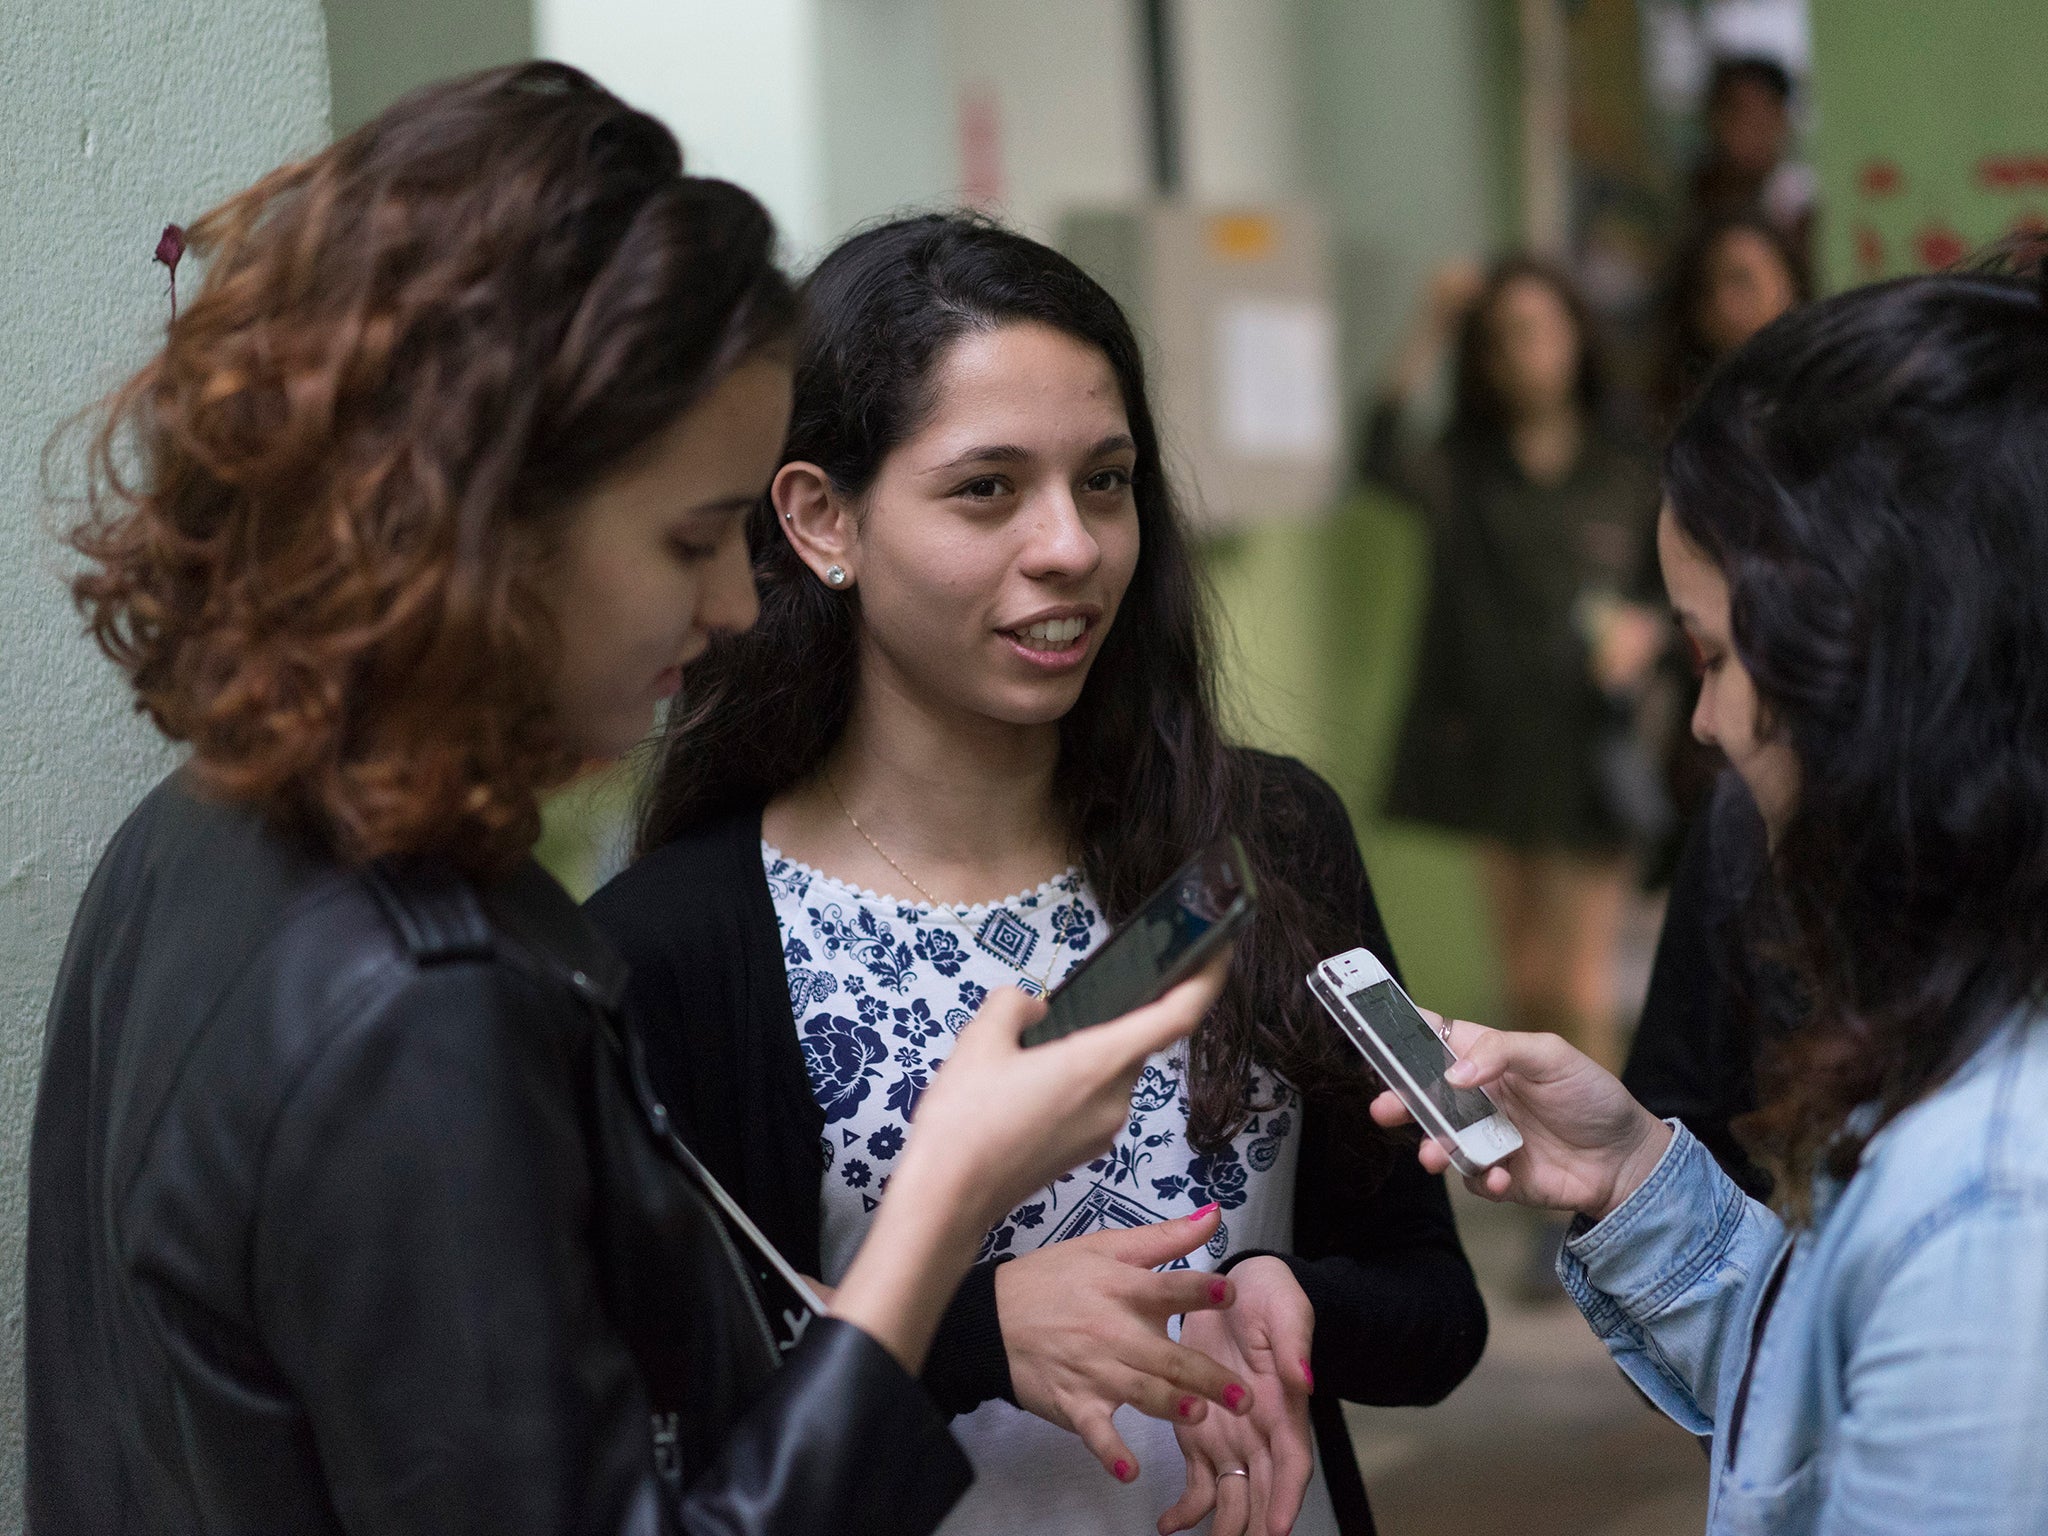 Ana Julia Pires Ribeiro, center, talks with students at the Colegio Pedro II school